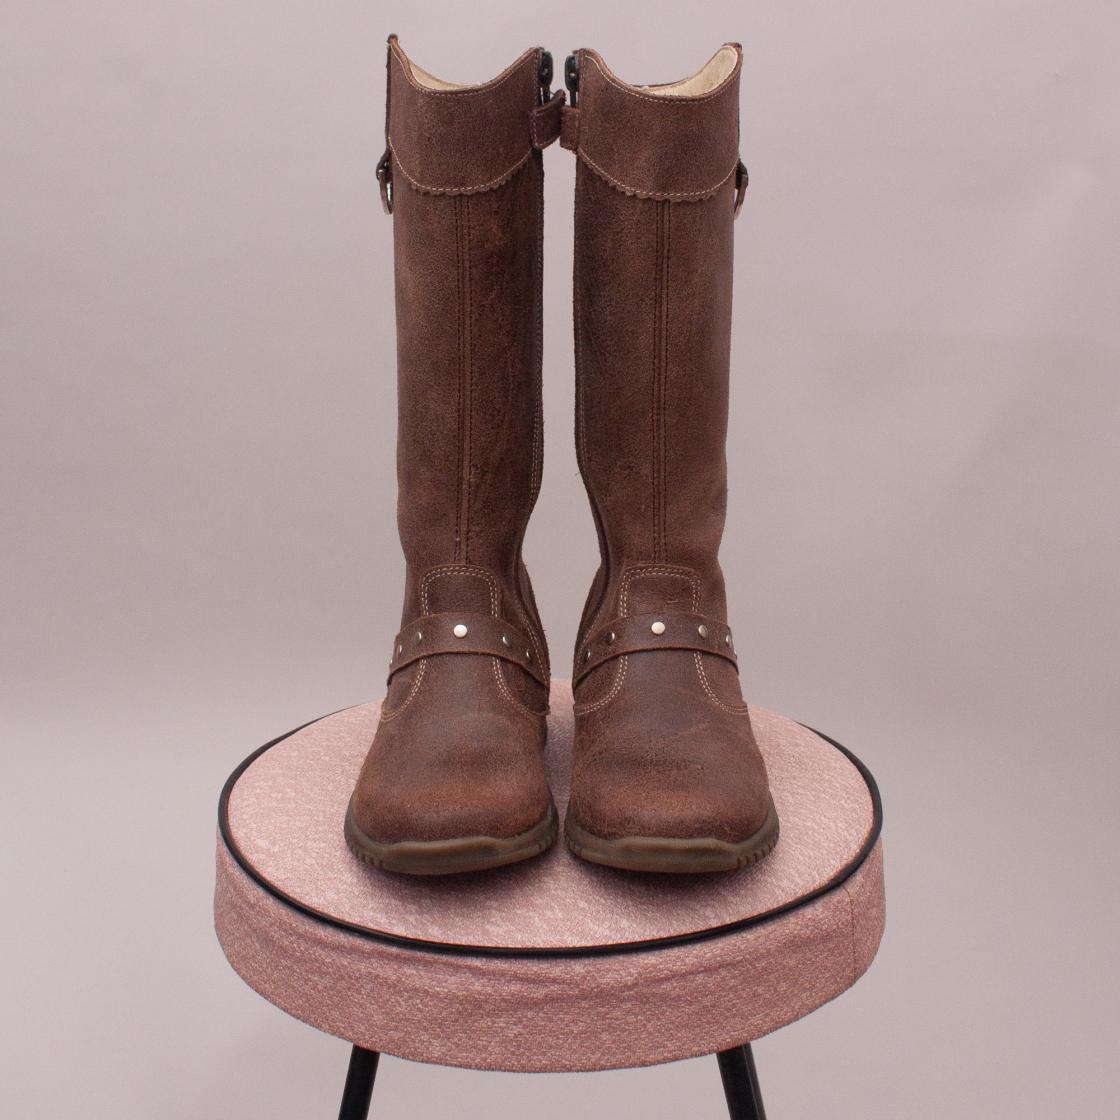 Balducci Tall Leather Boots - EU 24